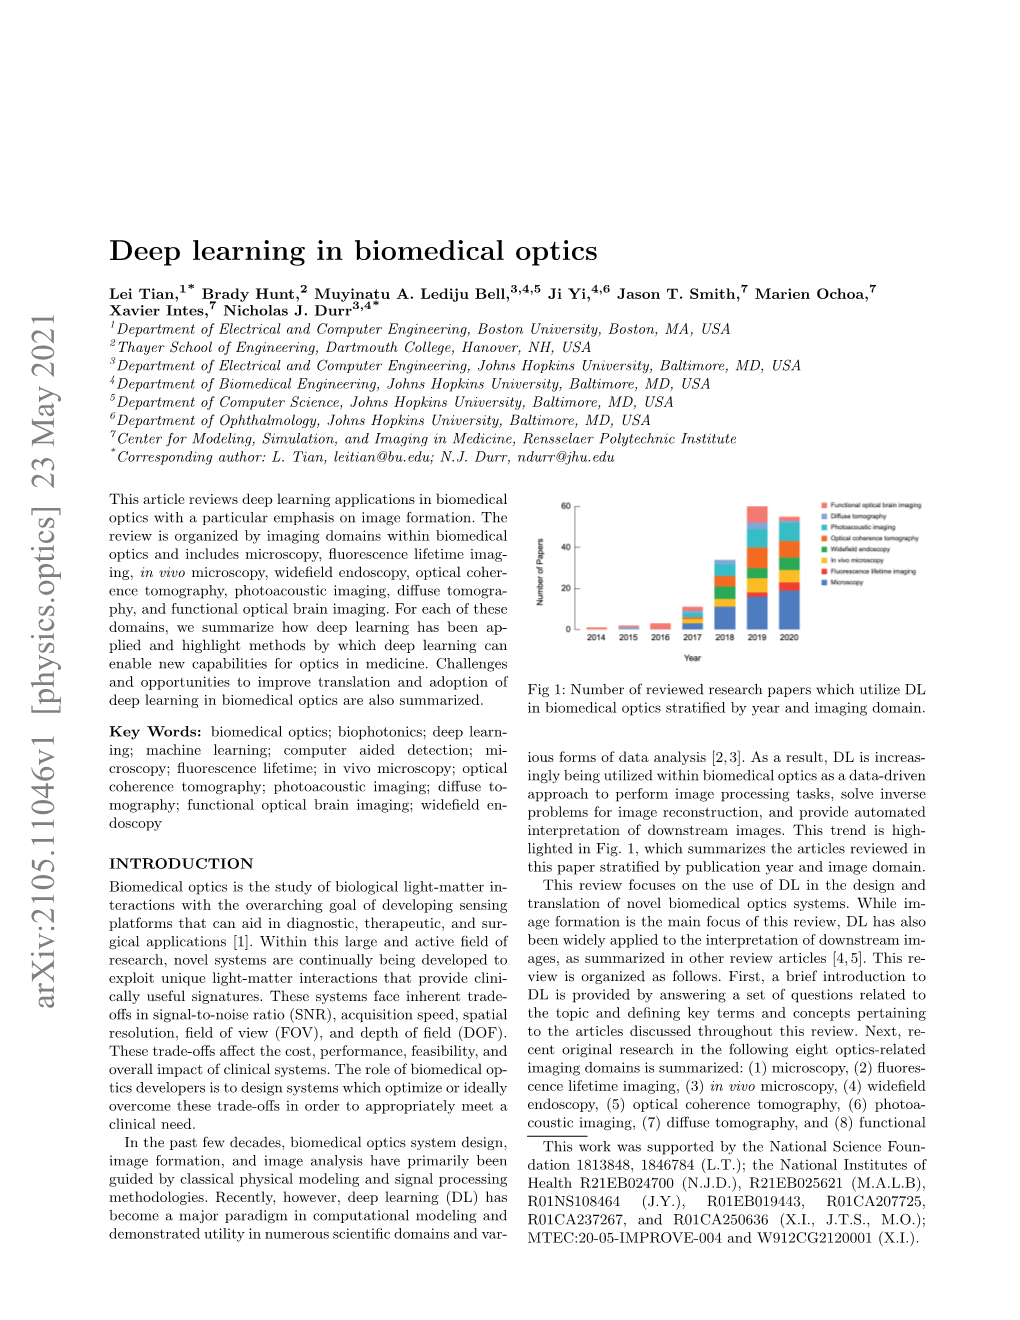 Deep Learning in Biomedical Optics